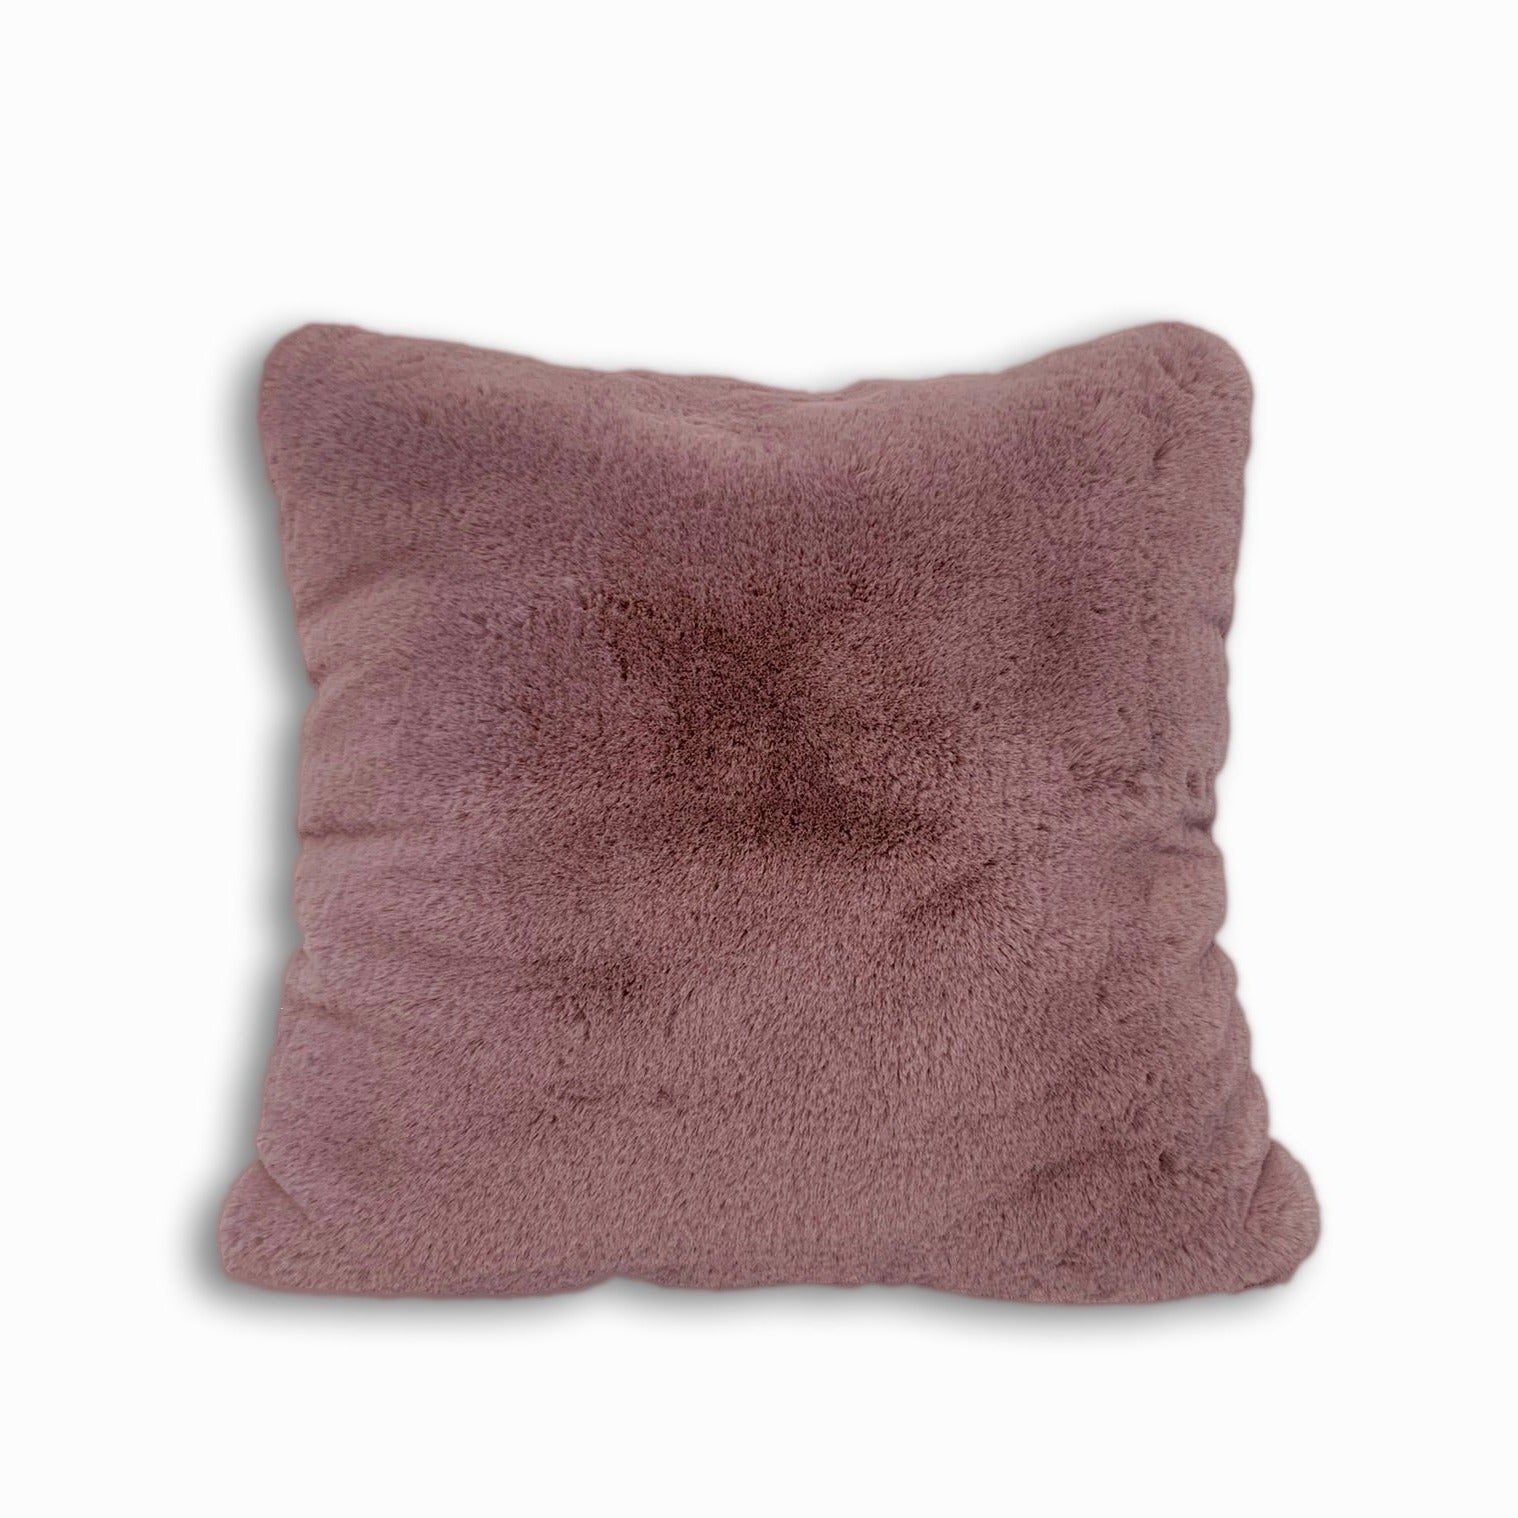 Soft Cozy Fuzzy Faux Fur Throw Pillow